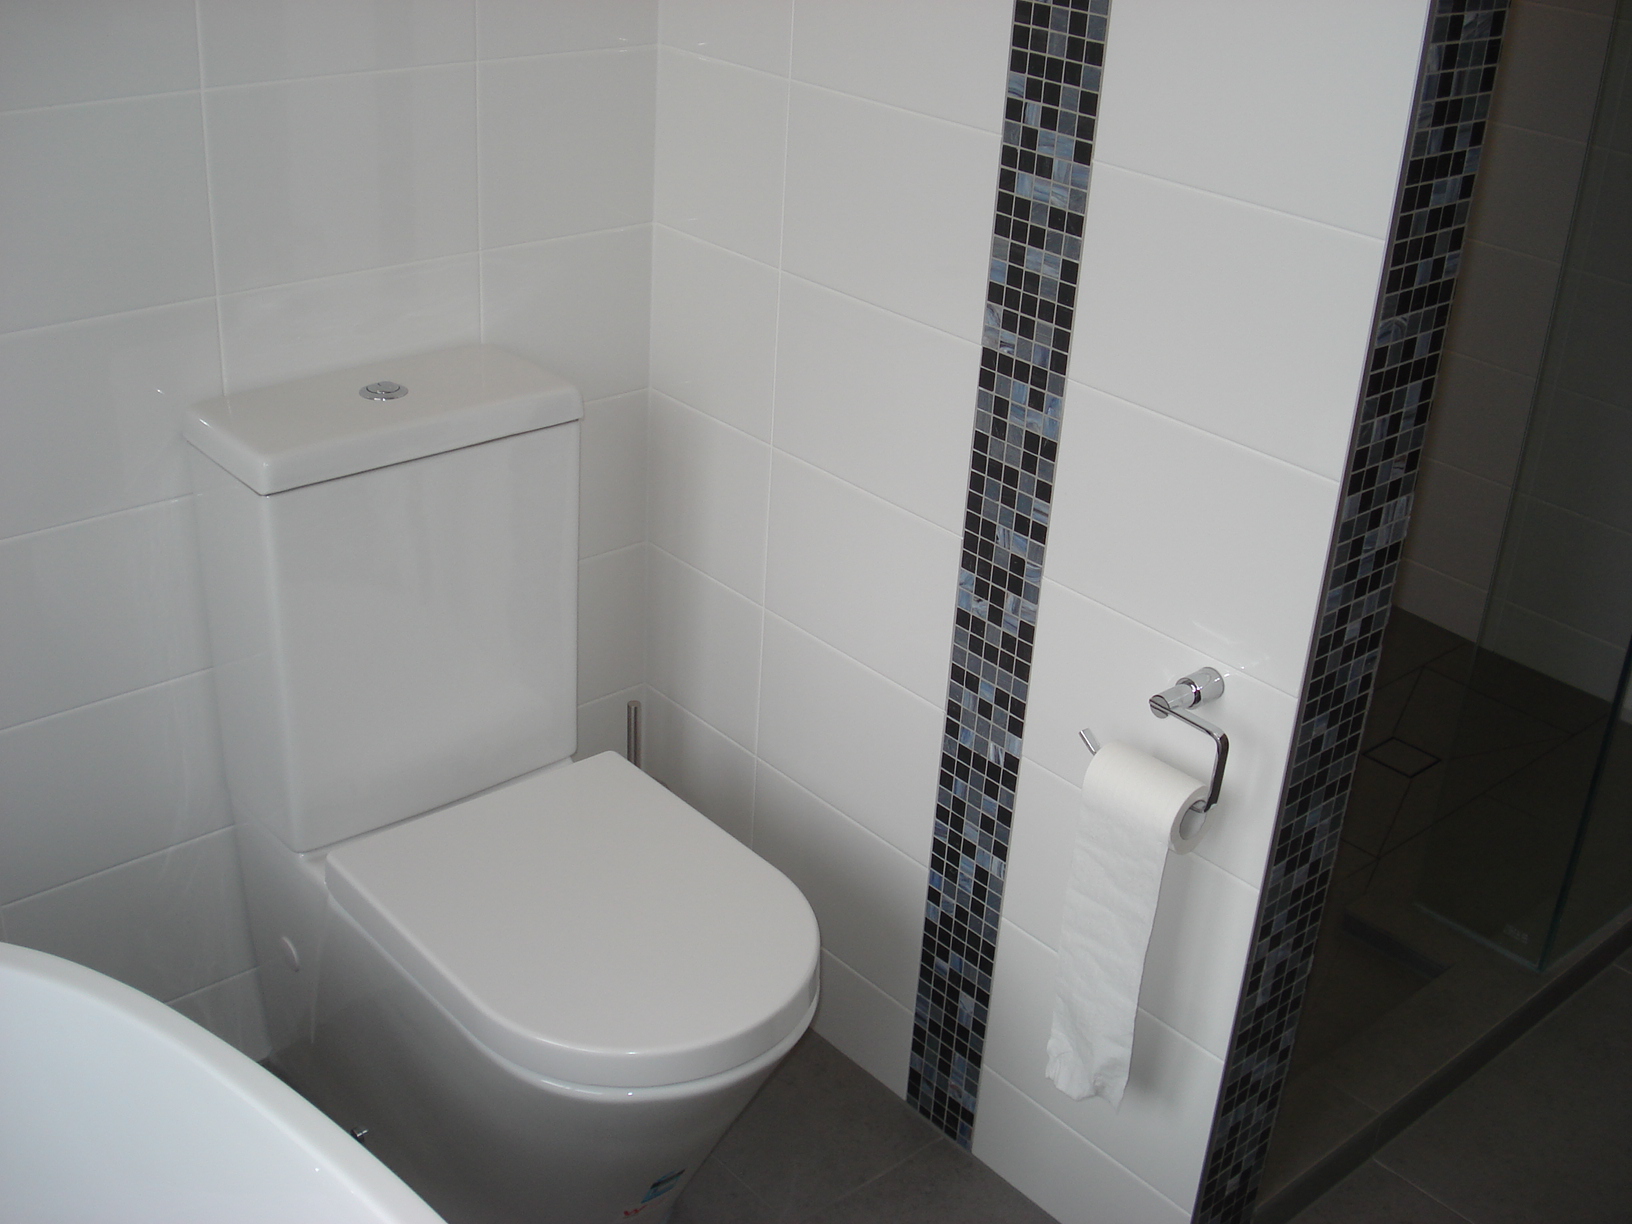 85 Kiwi Rd Bathroom Bisazza Stefania feature strip easy white wall tiles